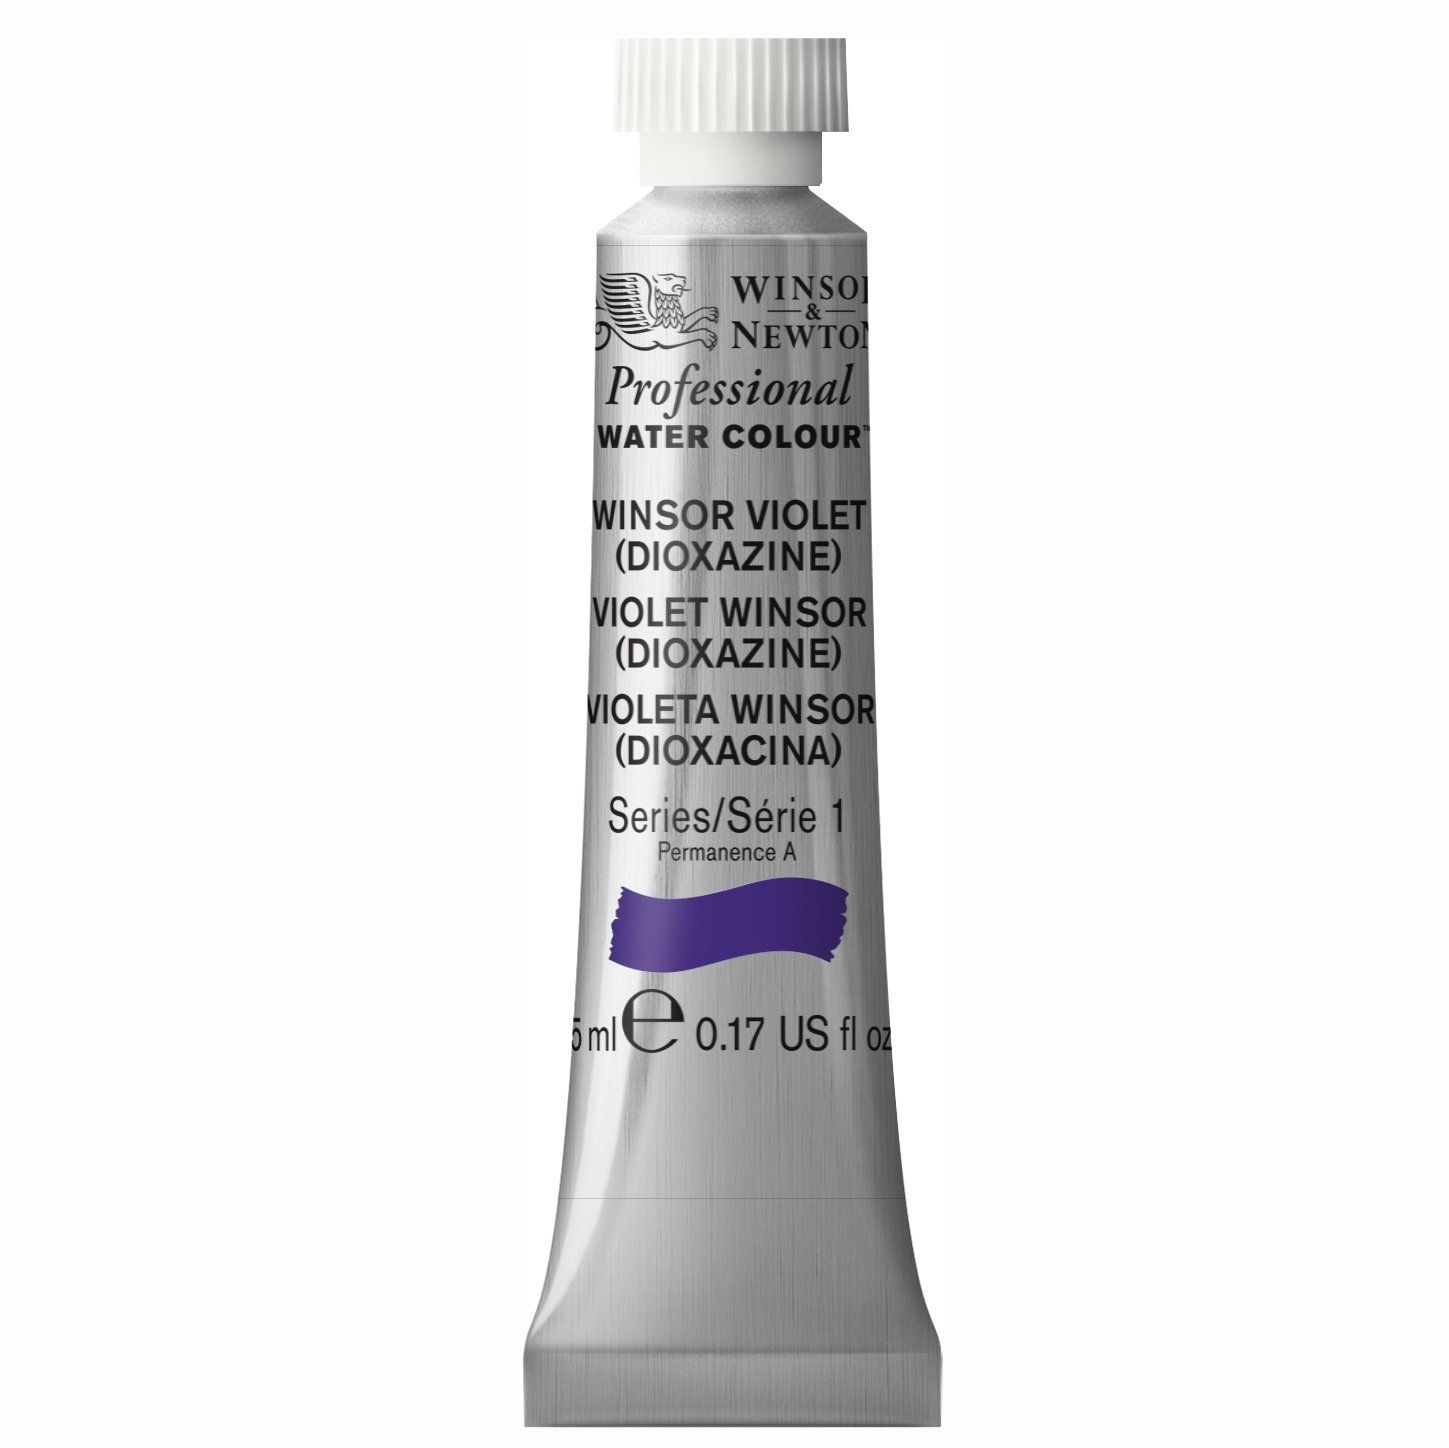 Winsor & Newton Watercolour Paint - Winsor Violet (Dioxazine) 5ml